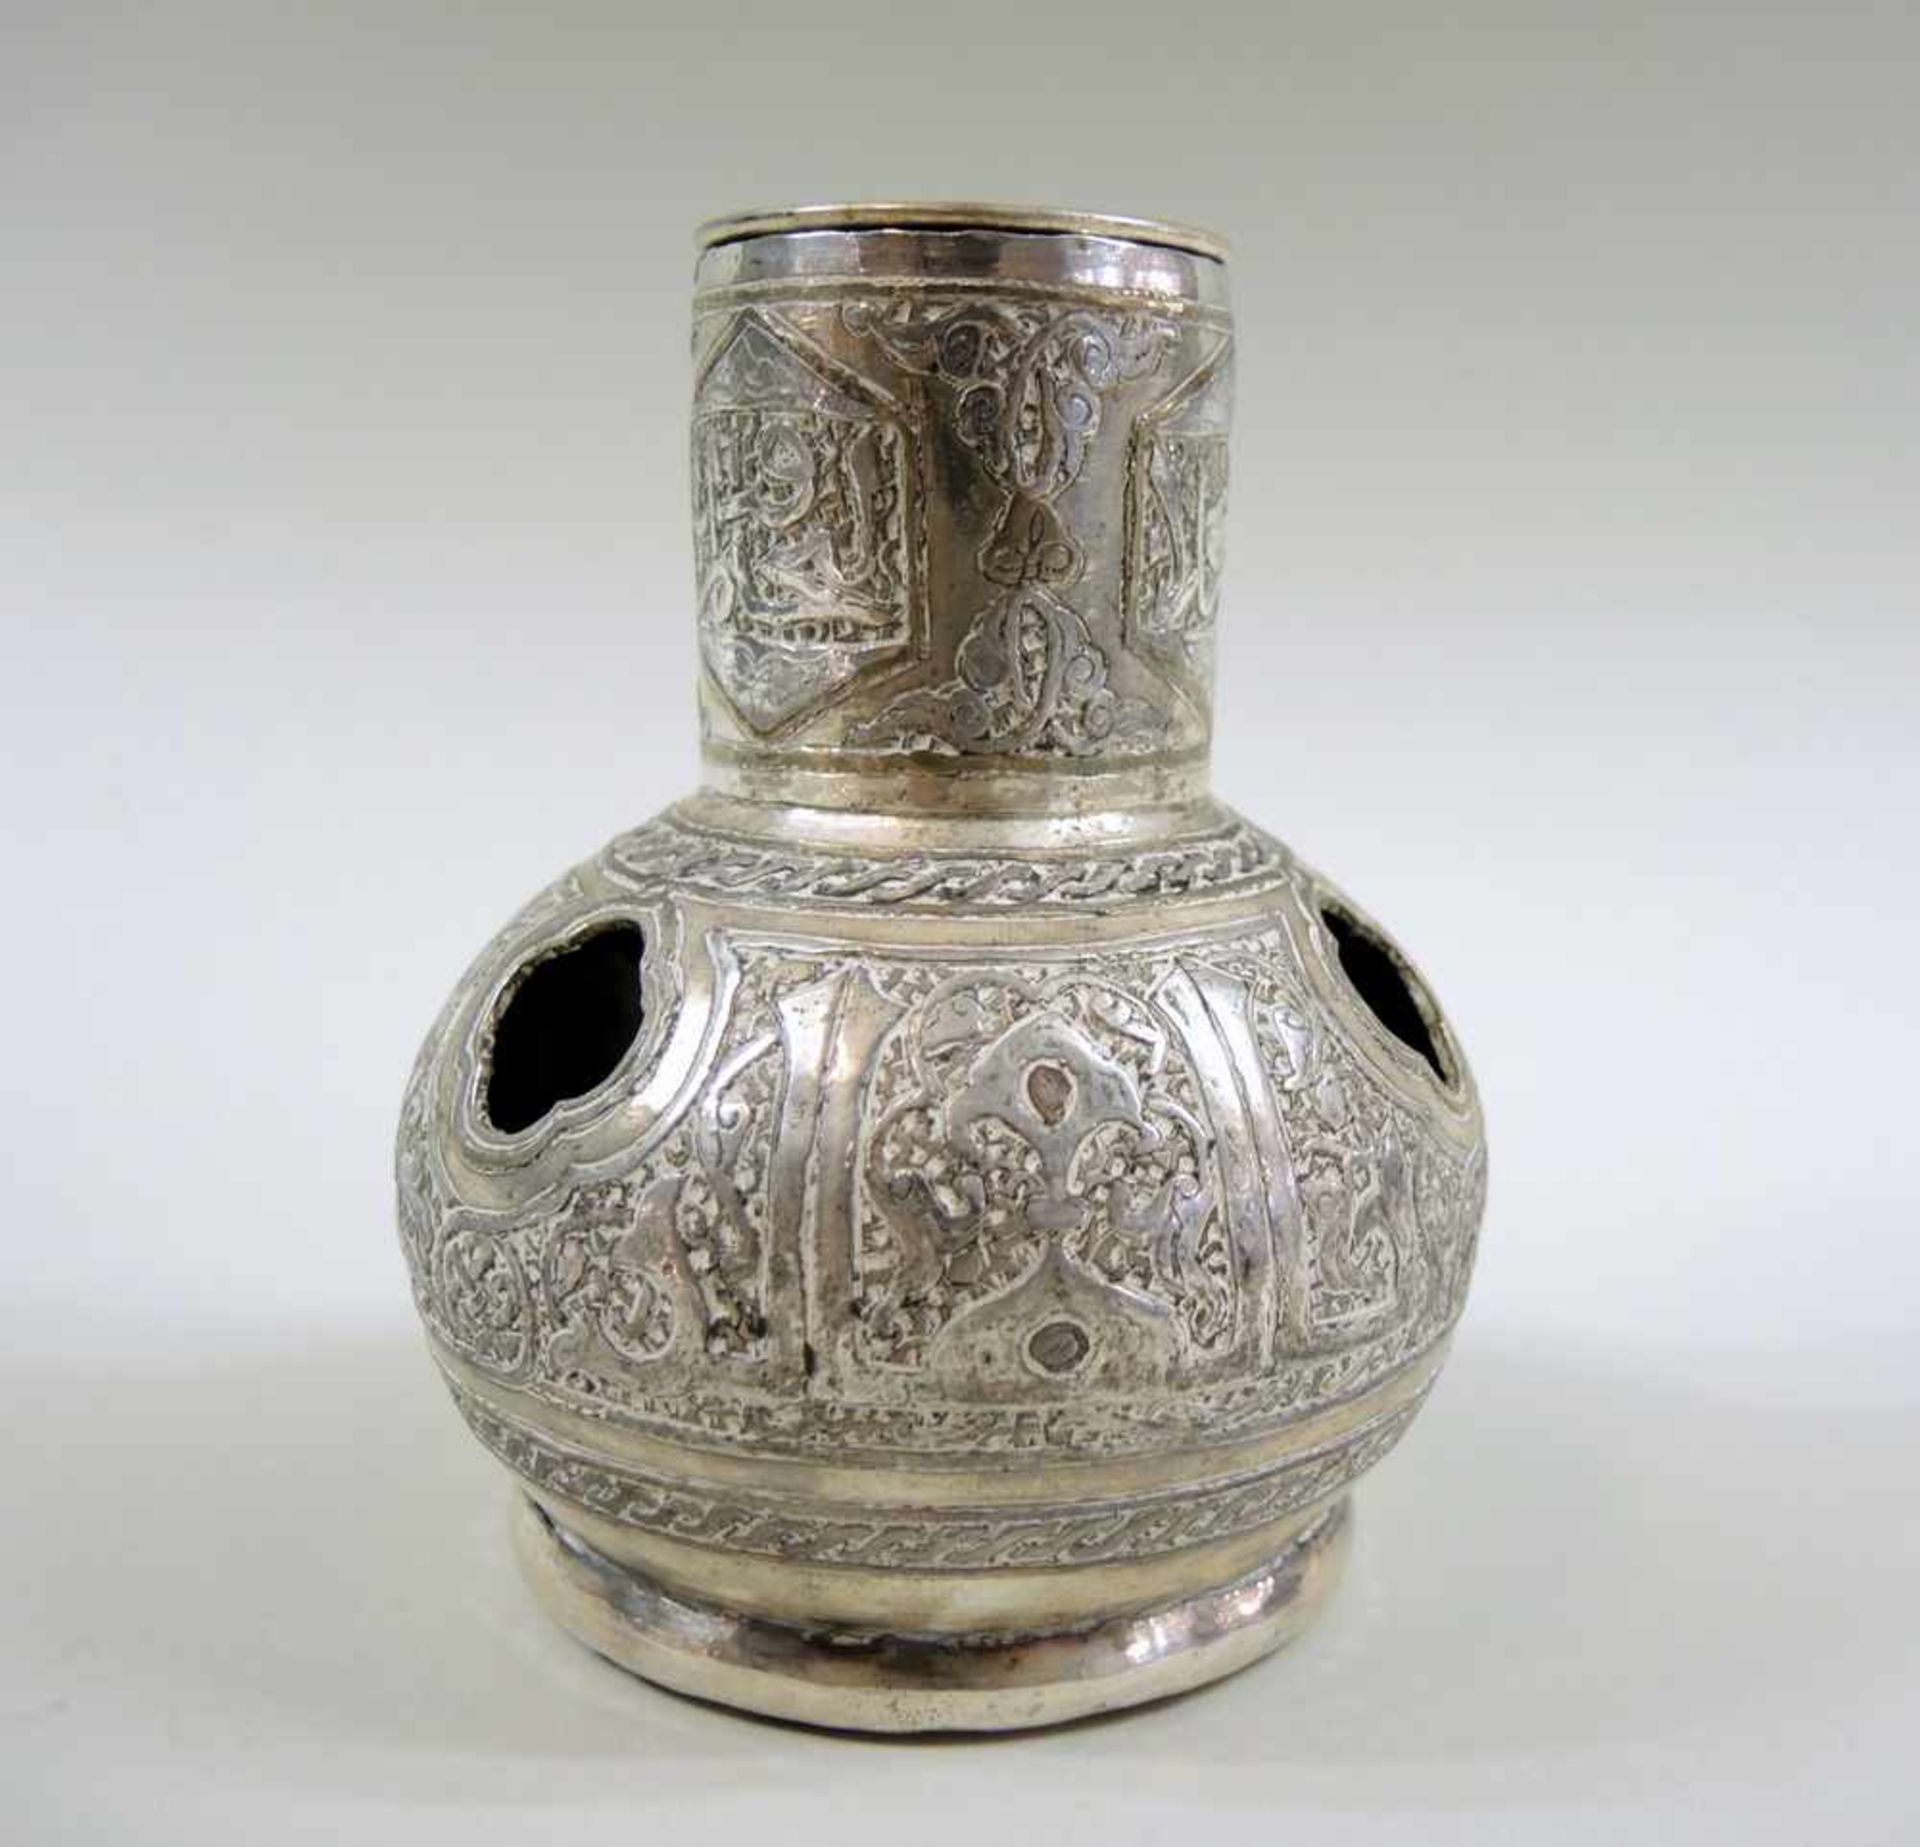 Osmanisches Räuchergefäß Silber. Kugeliger Korpus mit geradem Hals, Wandung durchbrochen, verziert